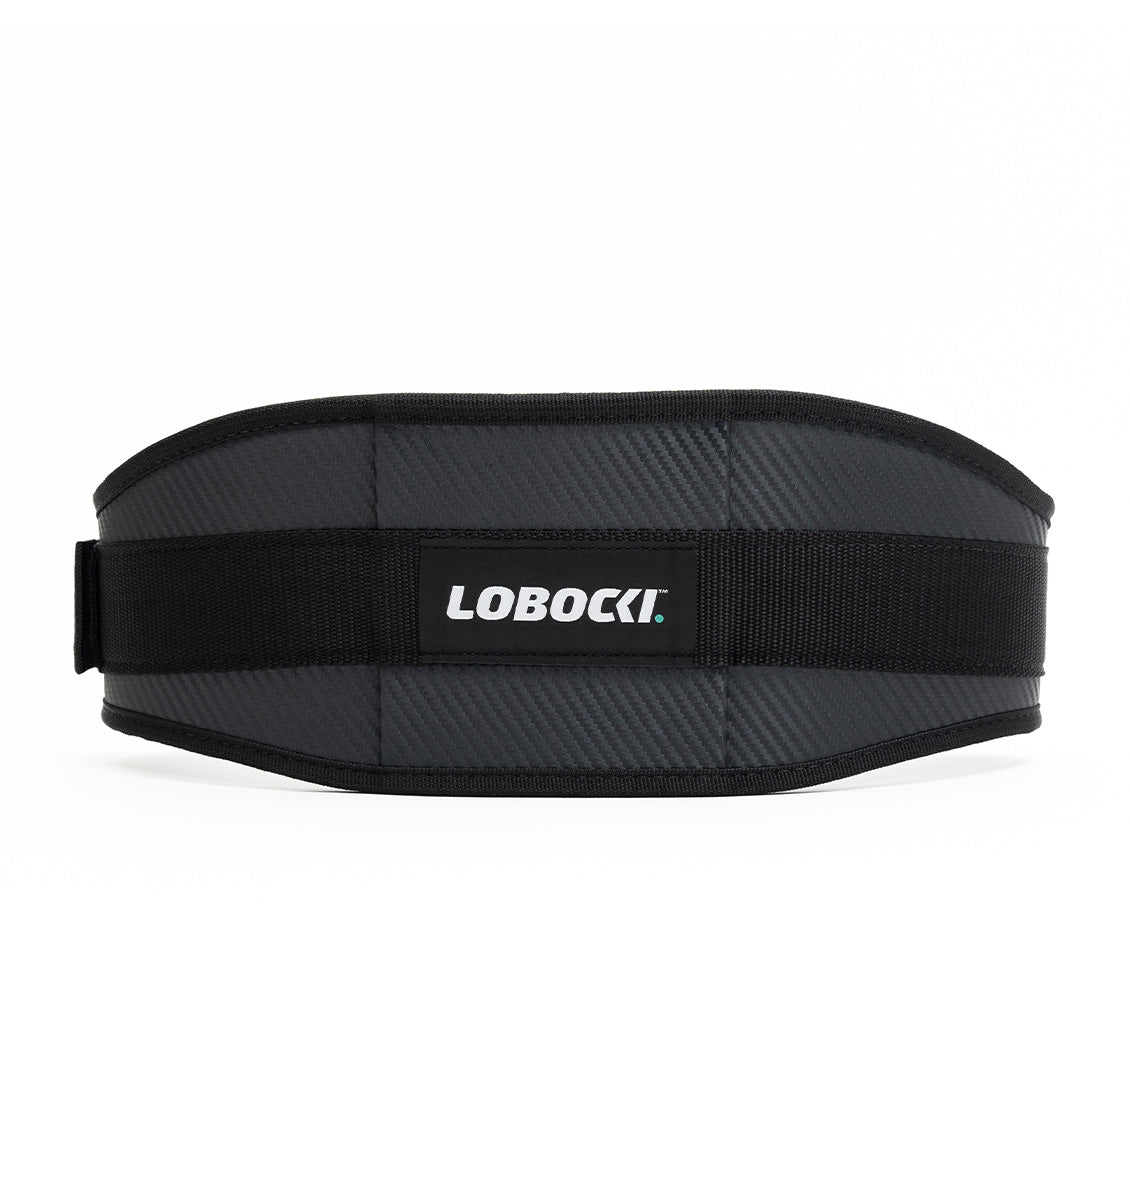 LOBOCKI x Schiek CF3006 Carbon Fibre Contour Weight Lifting Belt - Black - 1